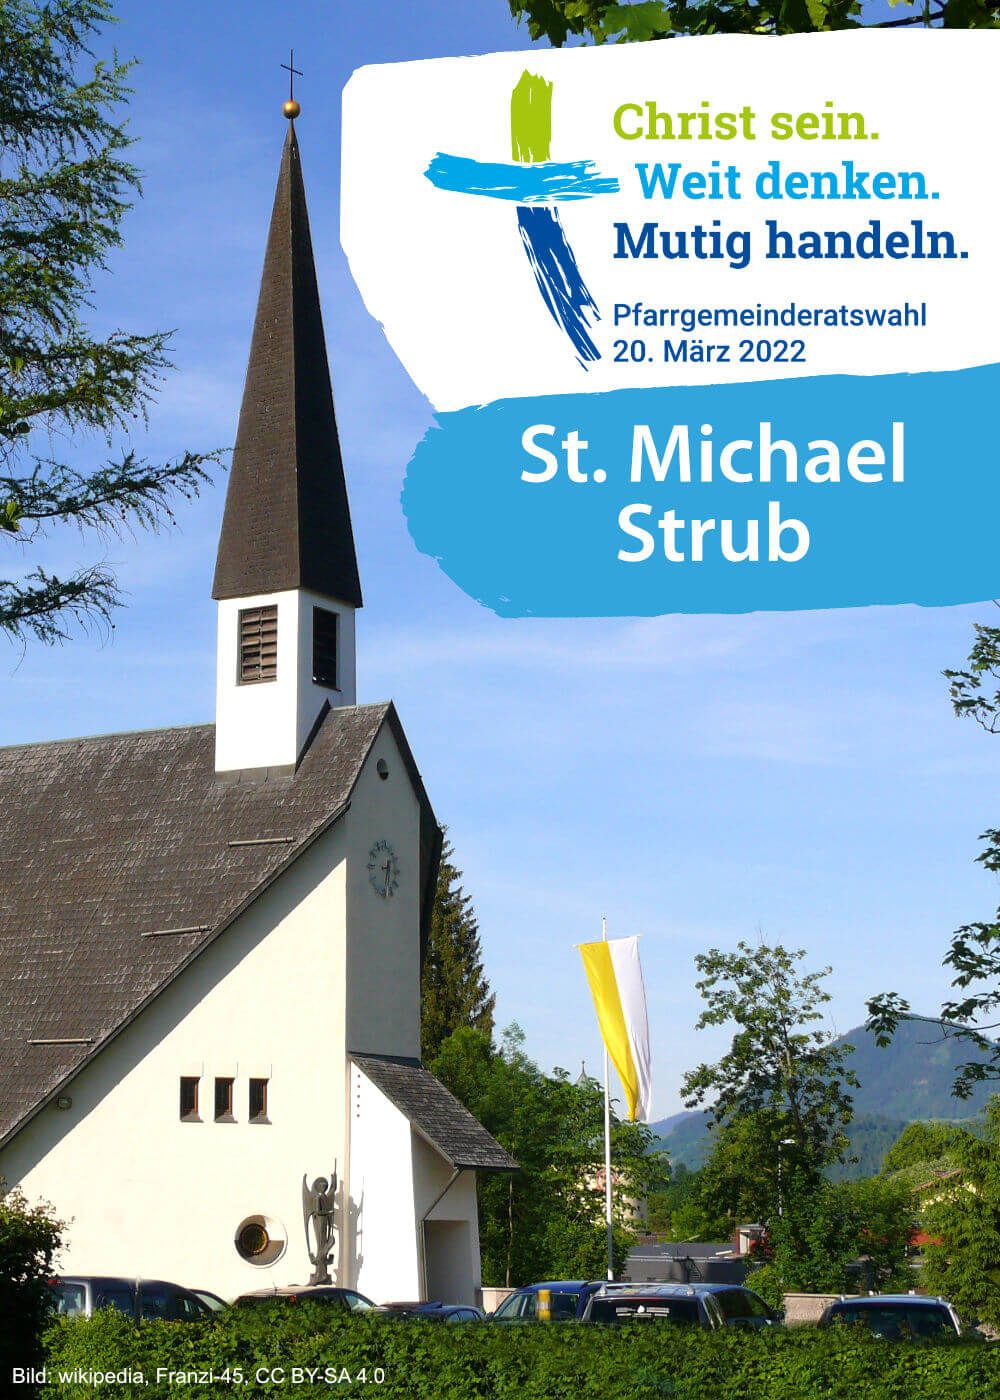 St. Michael Strub